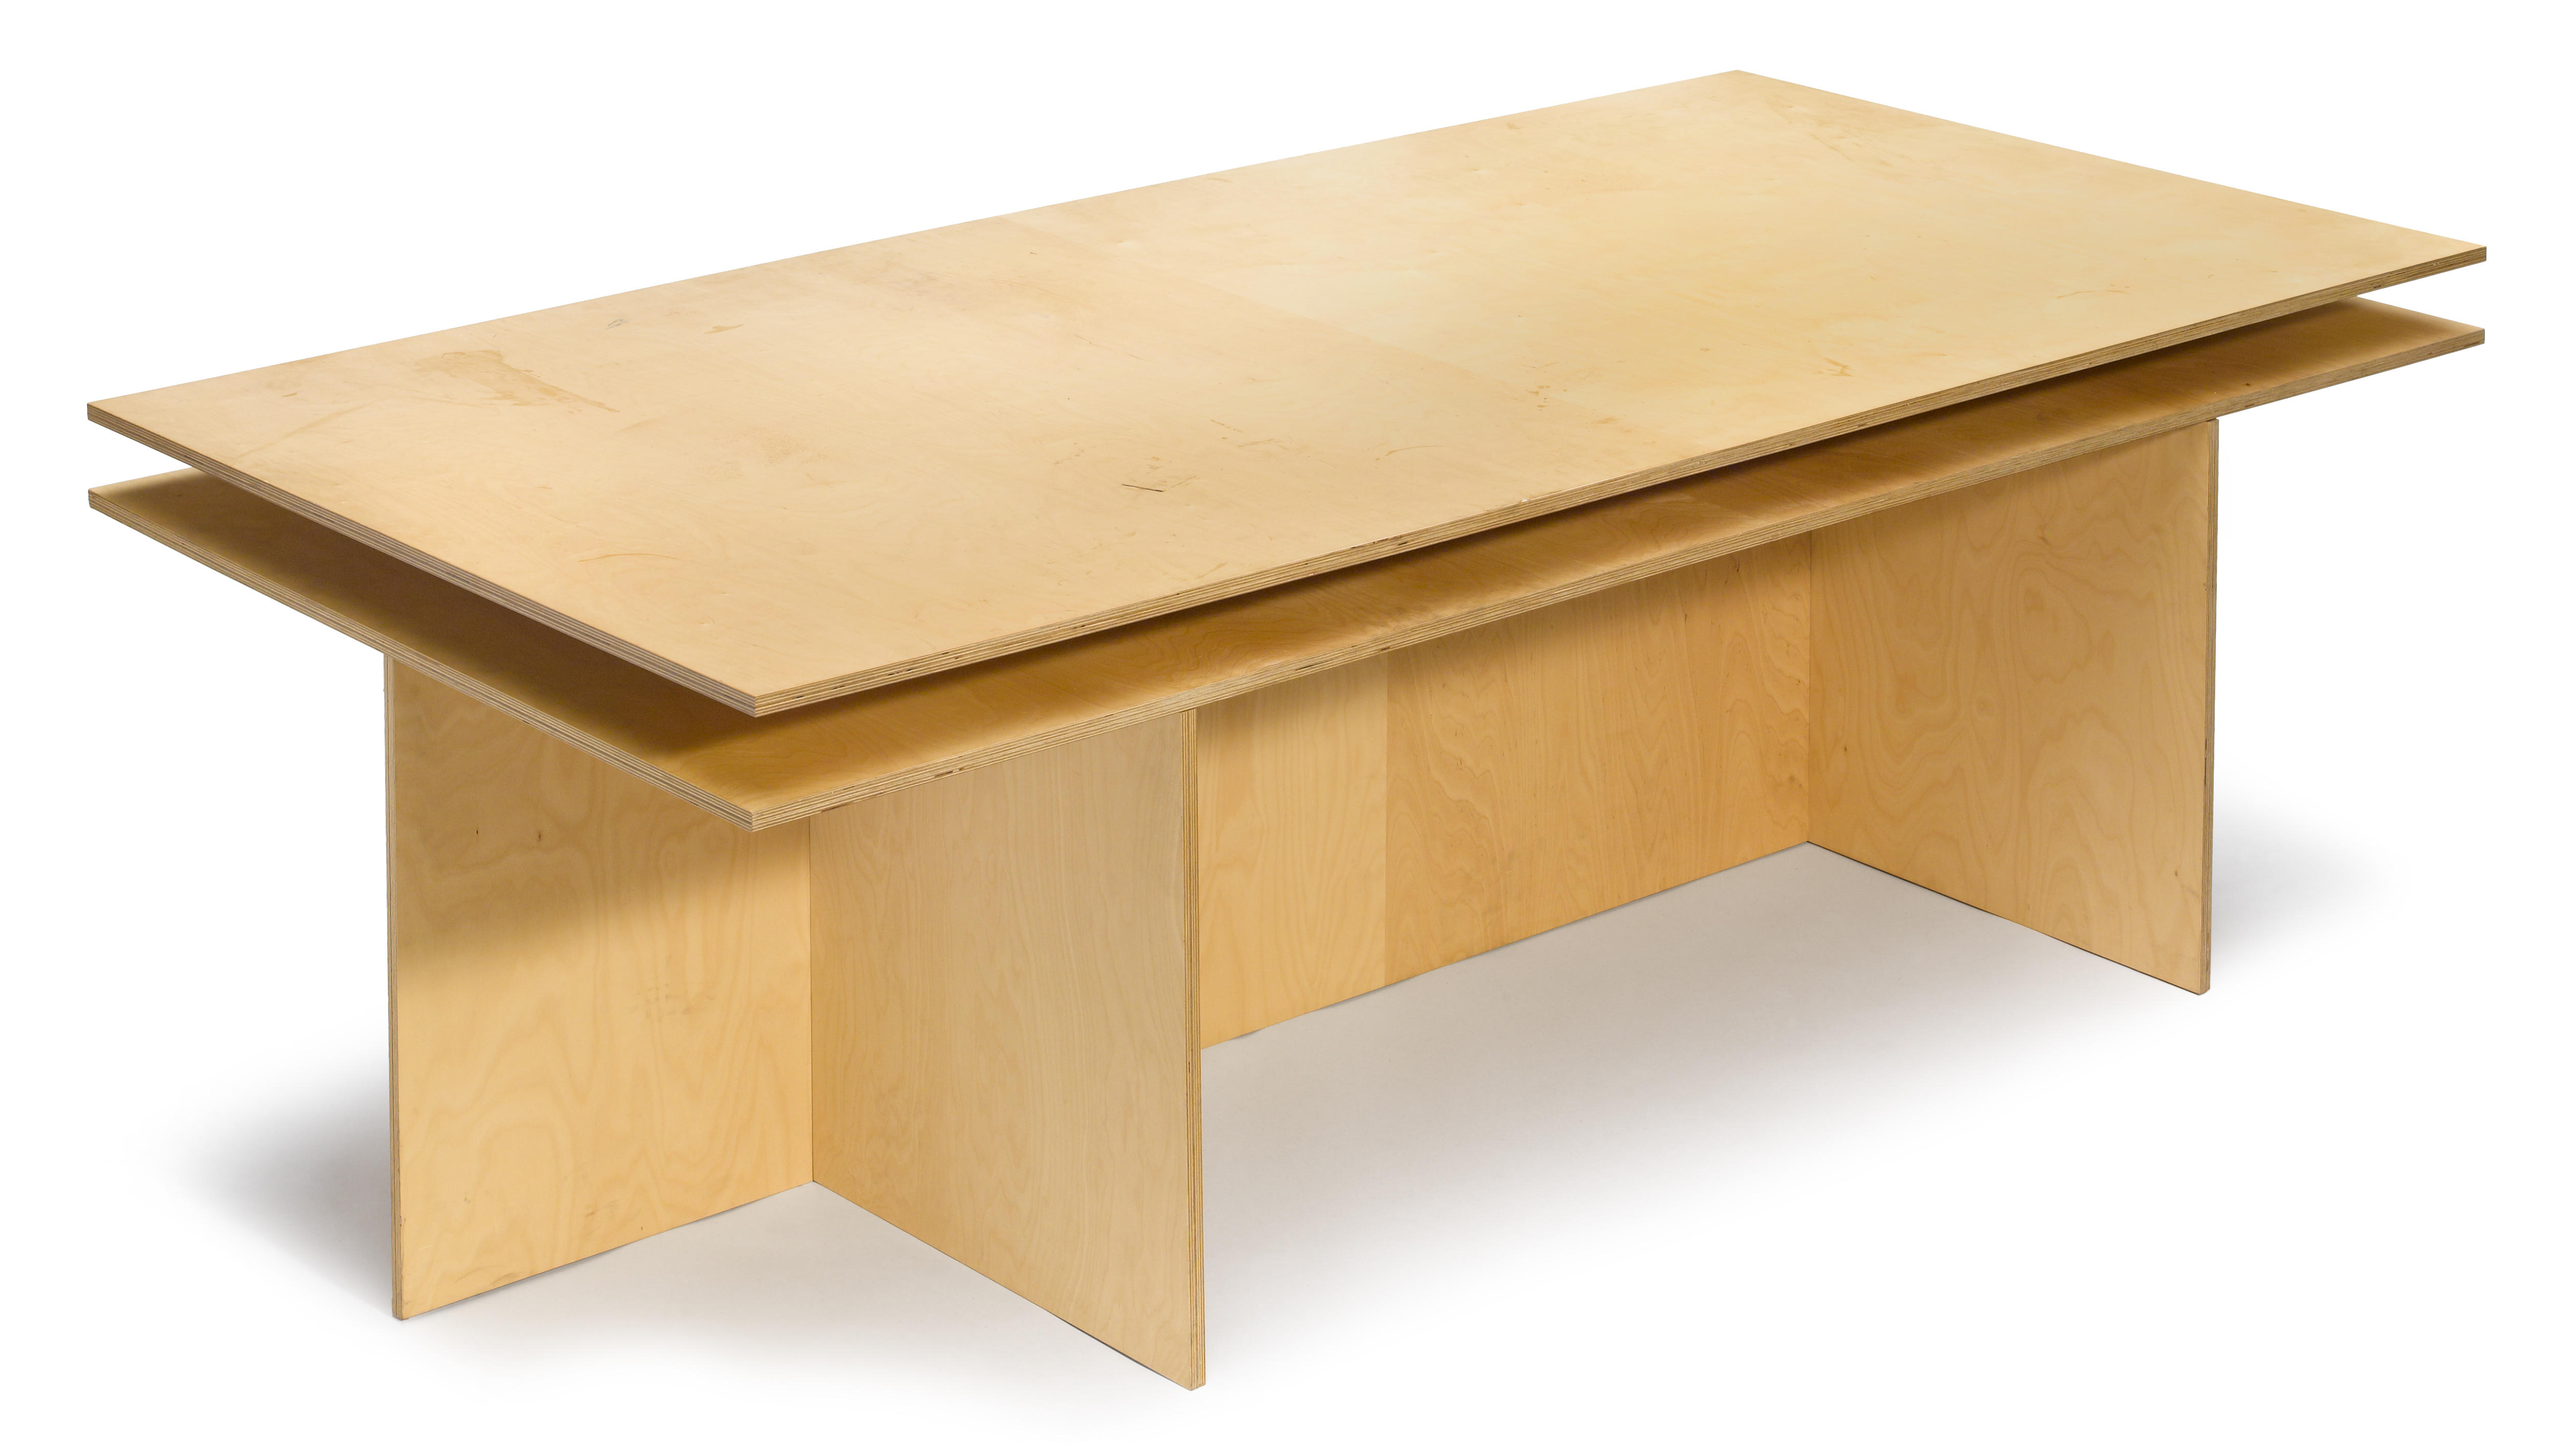 A Donald Judd plywood table circa